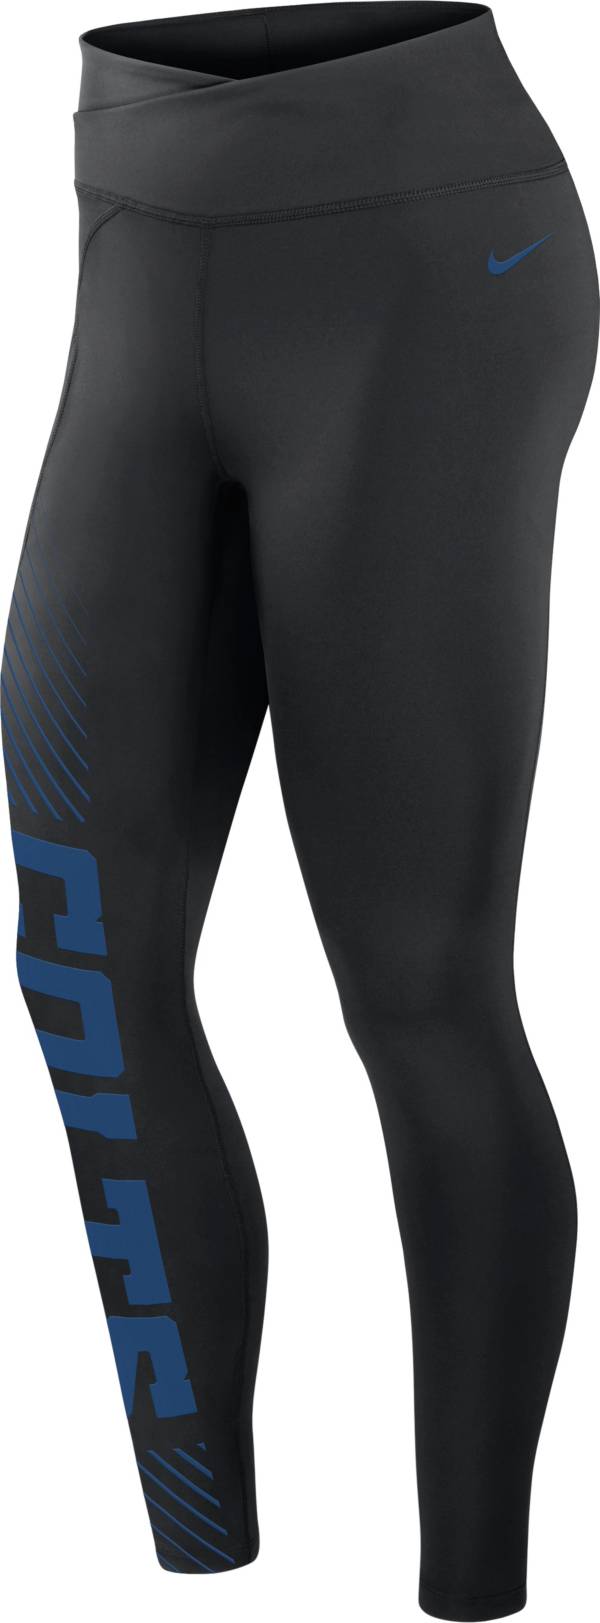 Nike Women's Indianapolis Colts Yard Line Black Leggings product image